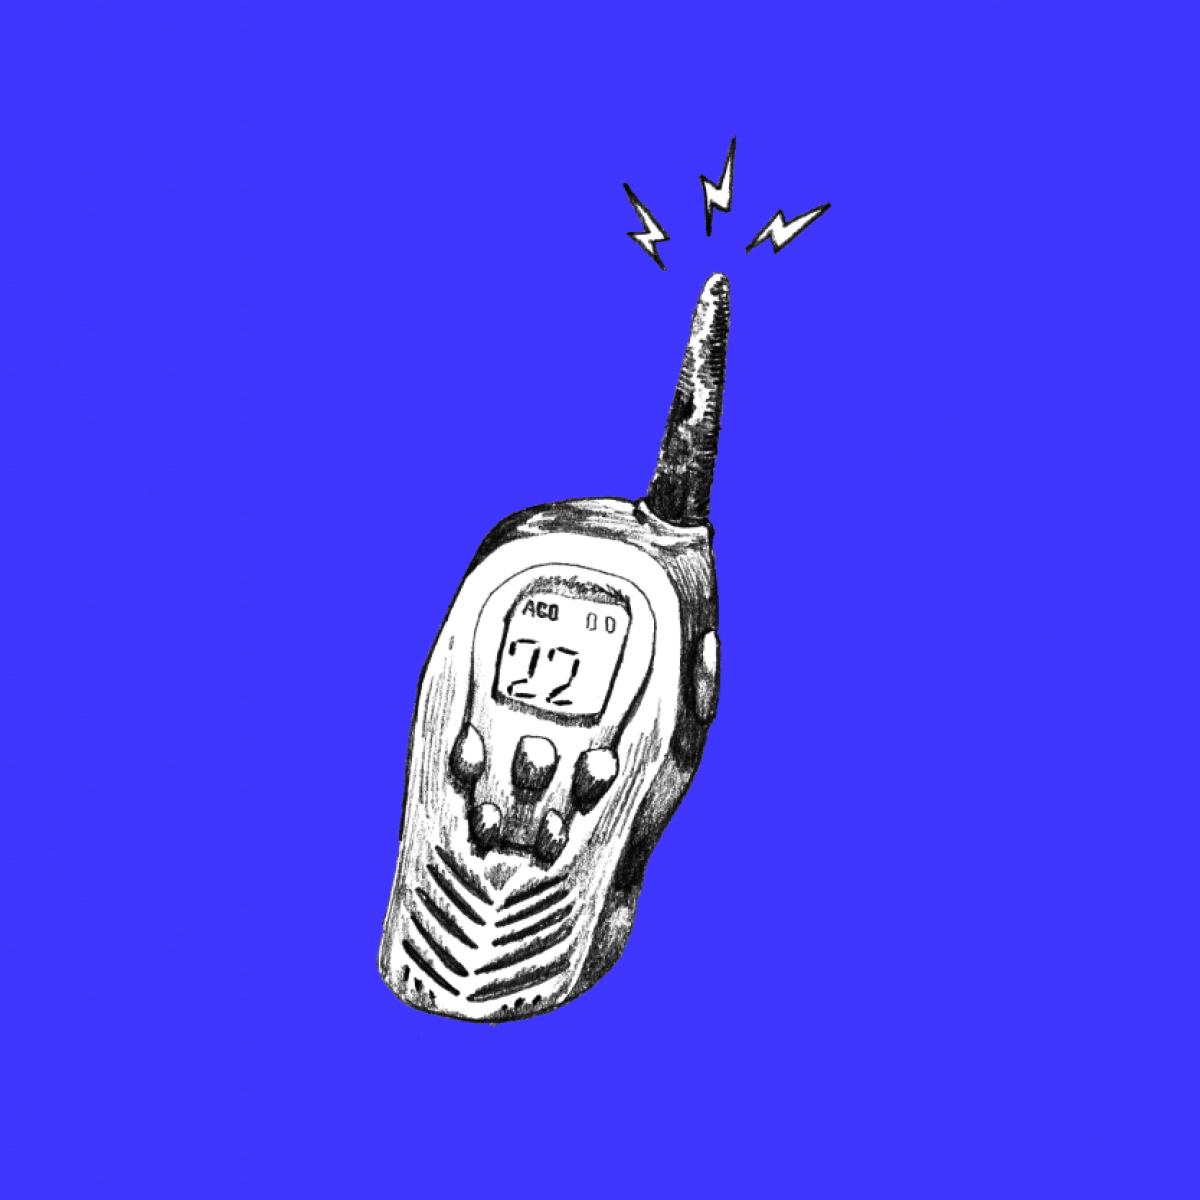 a drawing of a walkie-talkie